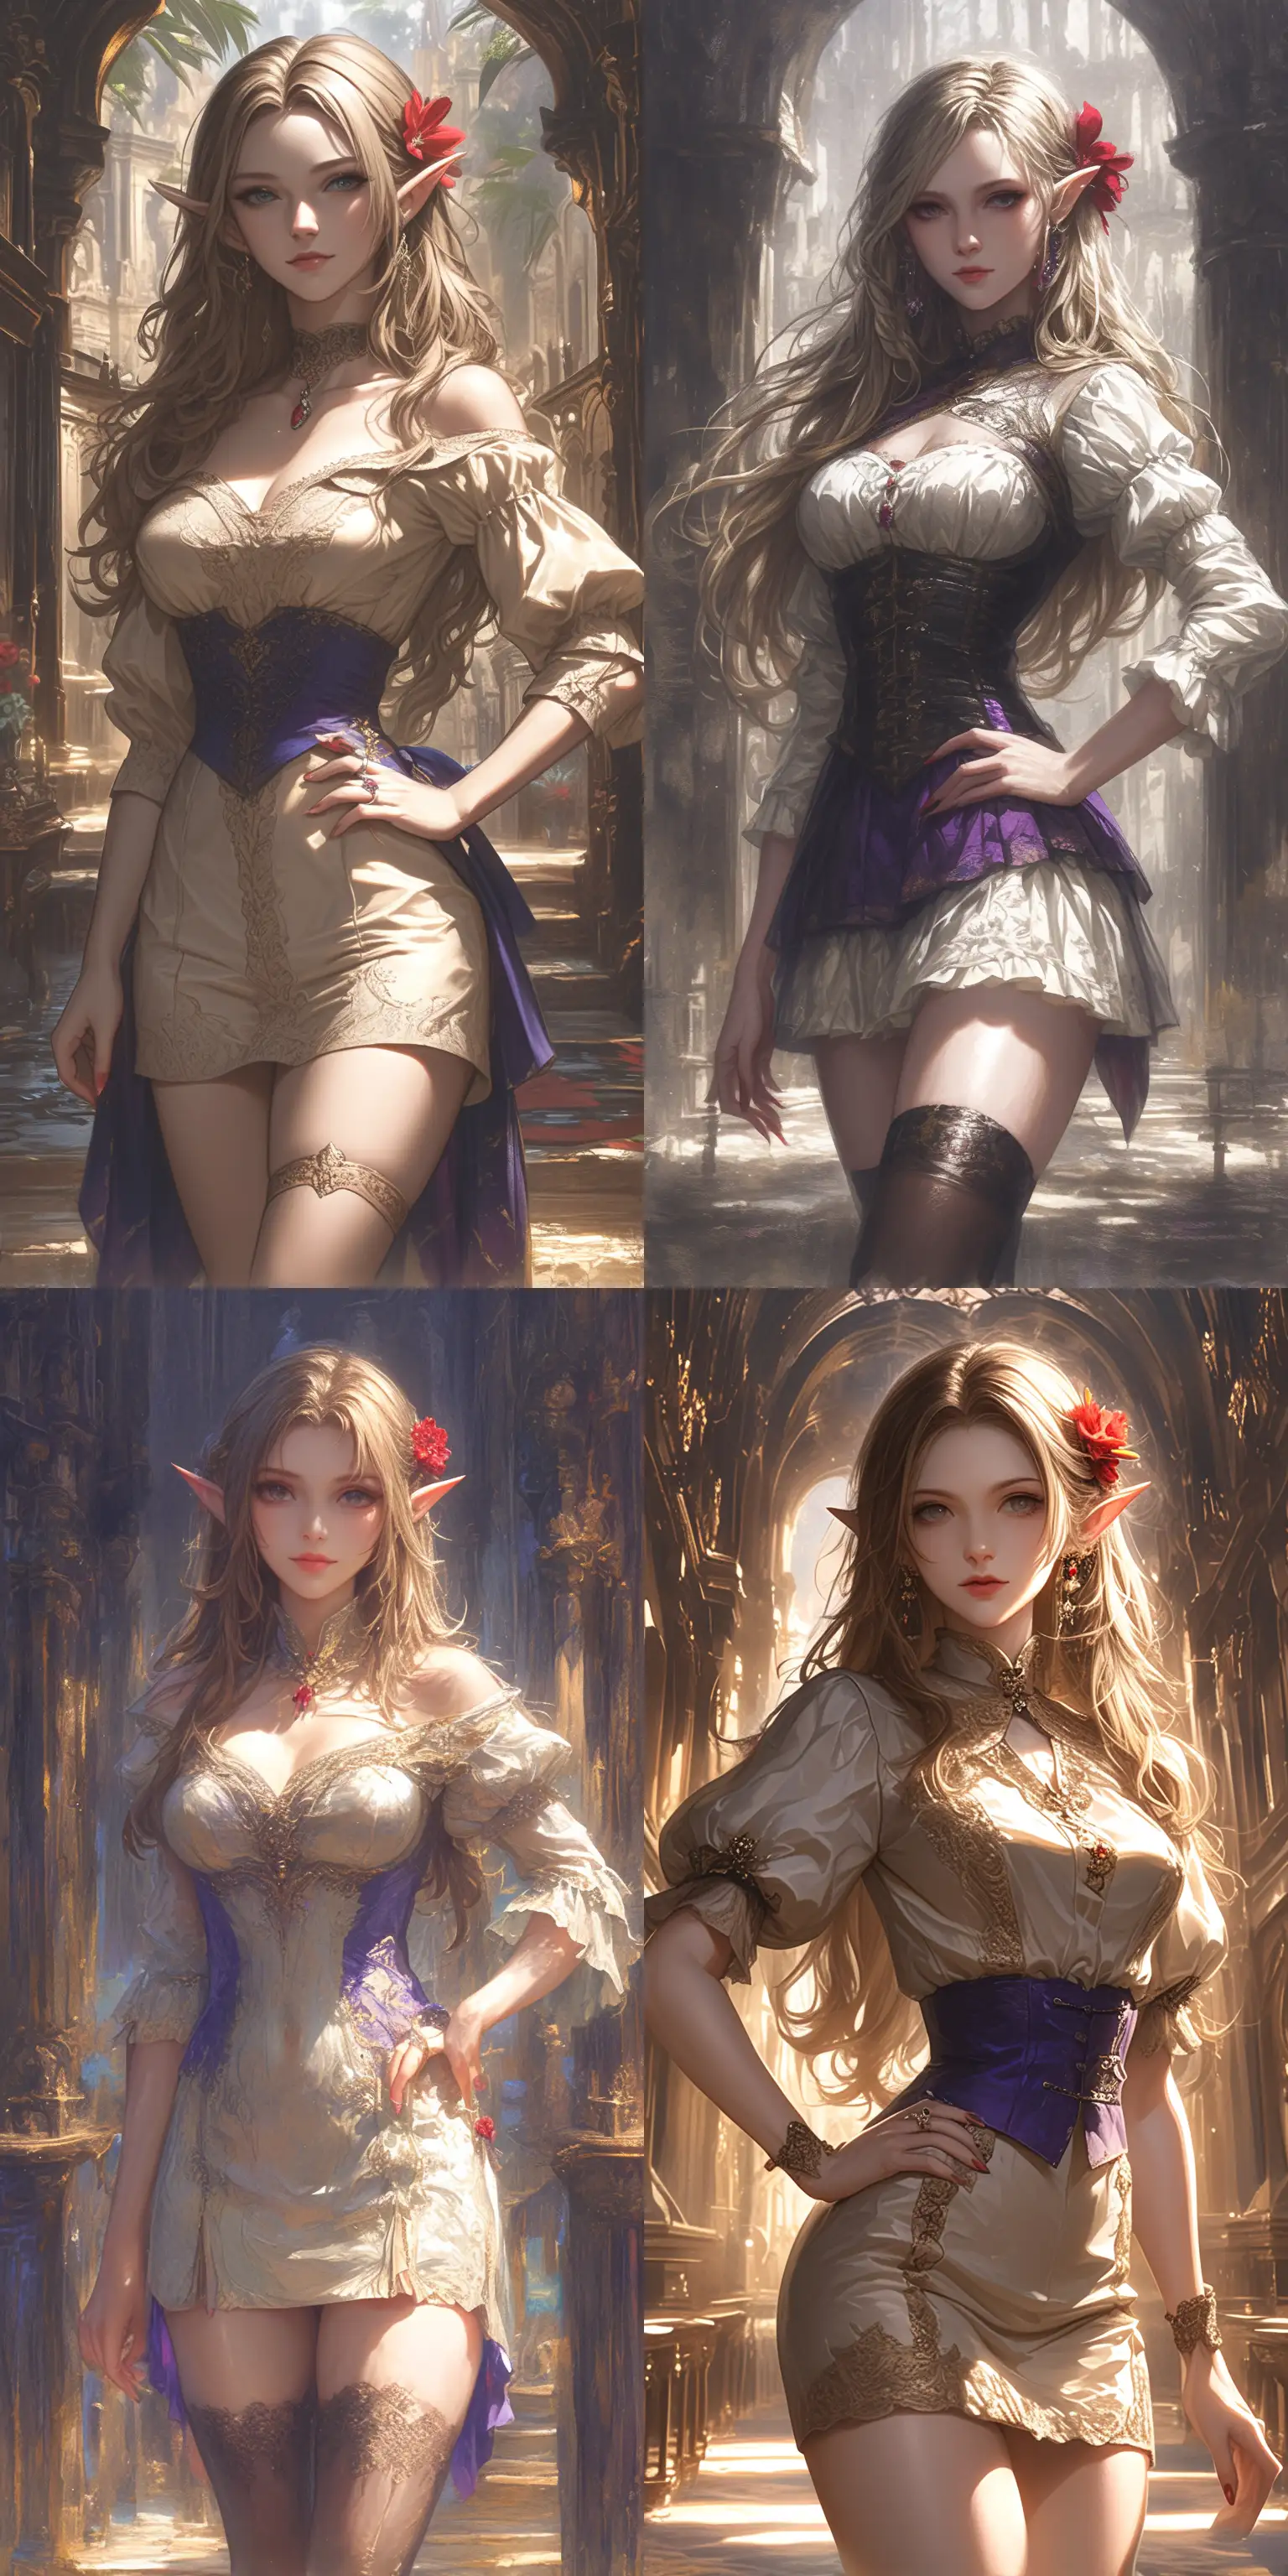 Enchanting-Elf-Vampire-in-Cream-and-Purple-Dress-in-Ancient-Castle-Ballroom